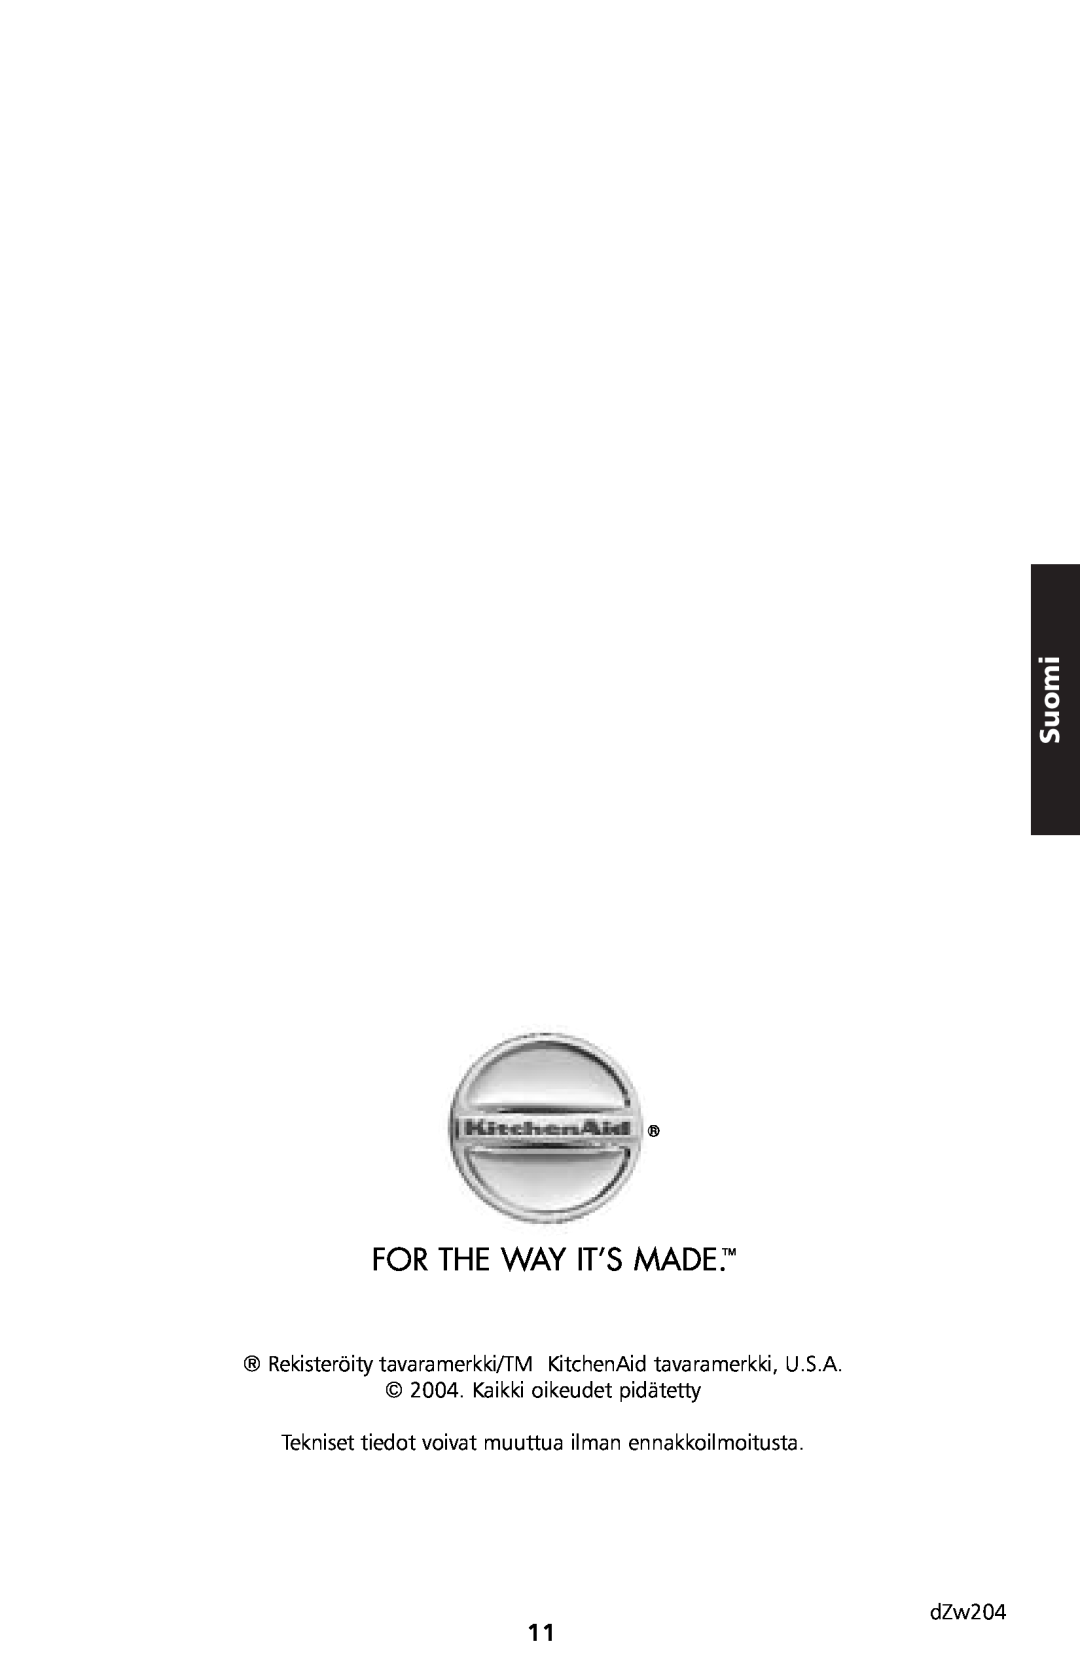 KitchenAid 5KTT890 manual For The Way It’S Made, Suomi, dZw204 